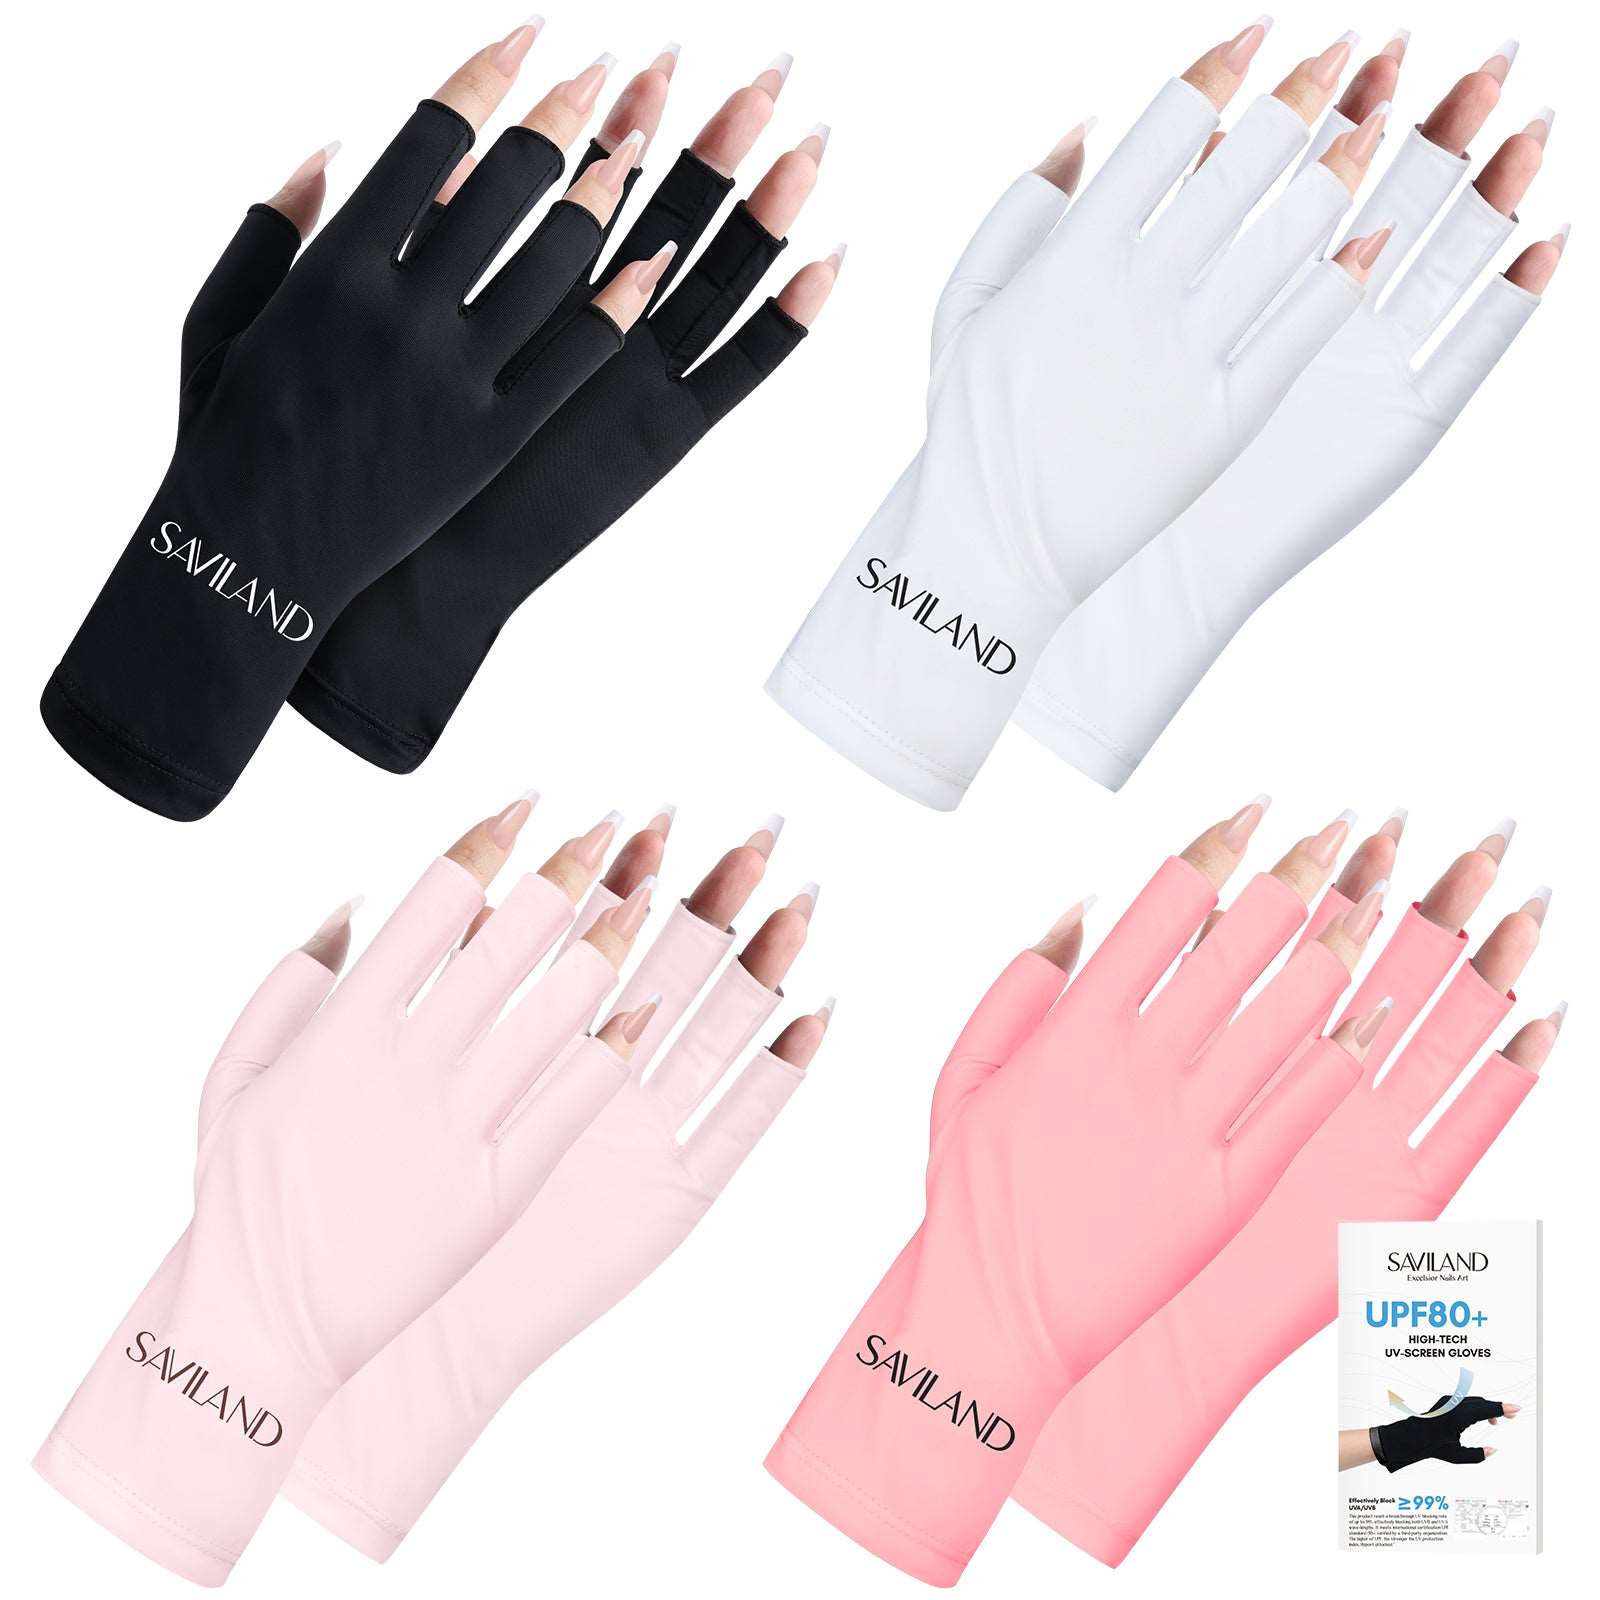  Saviland U V Glove for Nail Lamp - 2 Pairs Lace UPF60+  Professional U V Protection Gloves for Manicures, Fingerless U V Light  Gloves for Anti U V Glove Protect